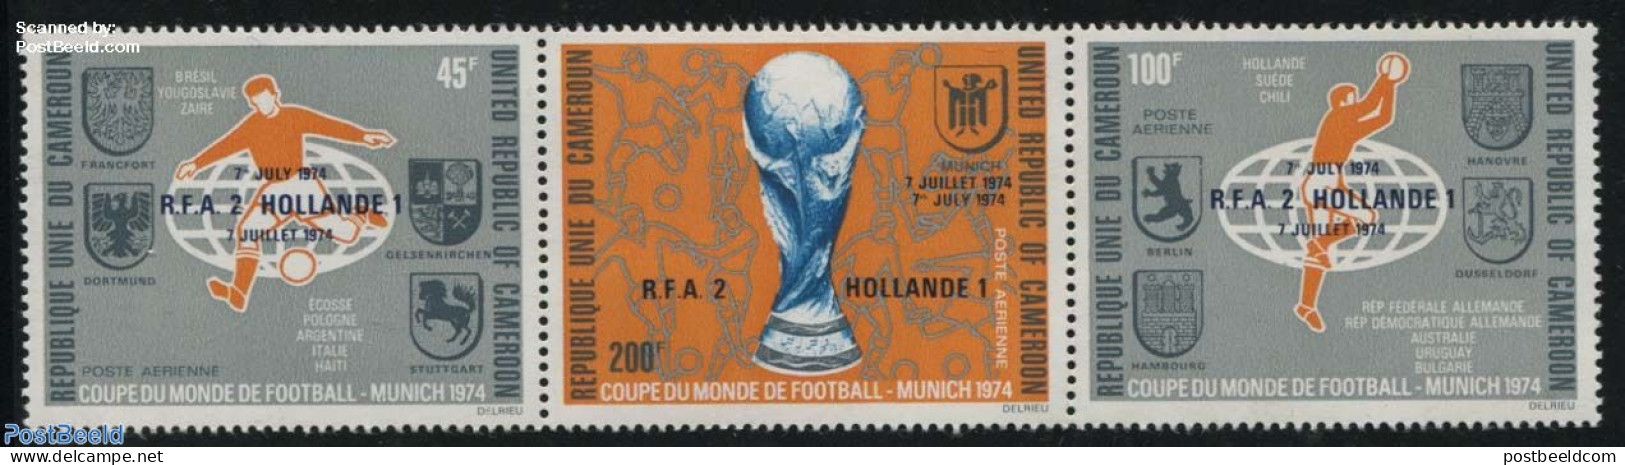 Cameroon 1974 Football Winners 3v [::], Mint NH, History - Sport - Netherlands & Dutch - Football - Geography